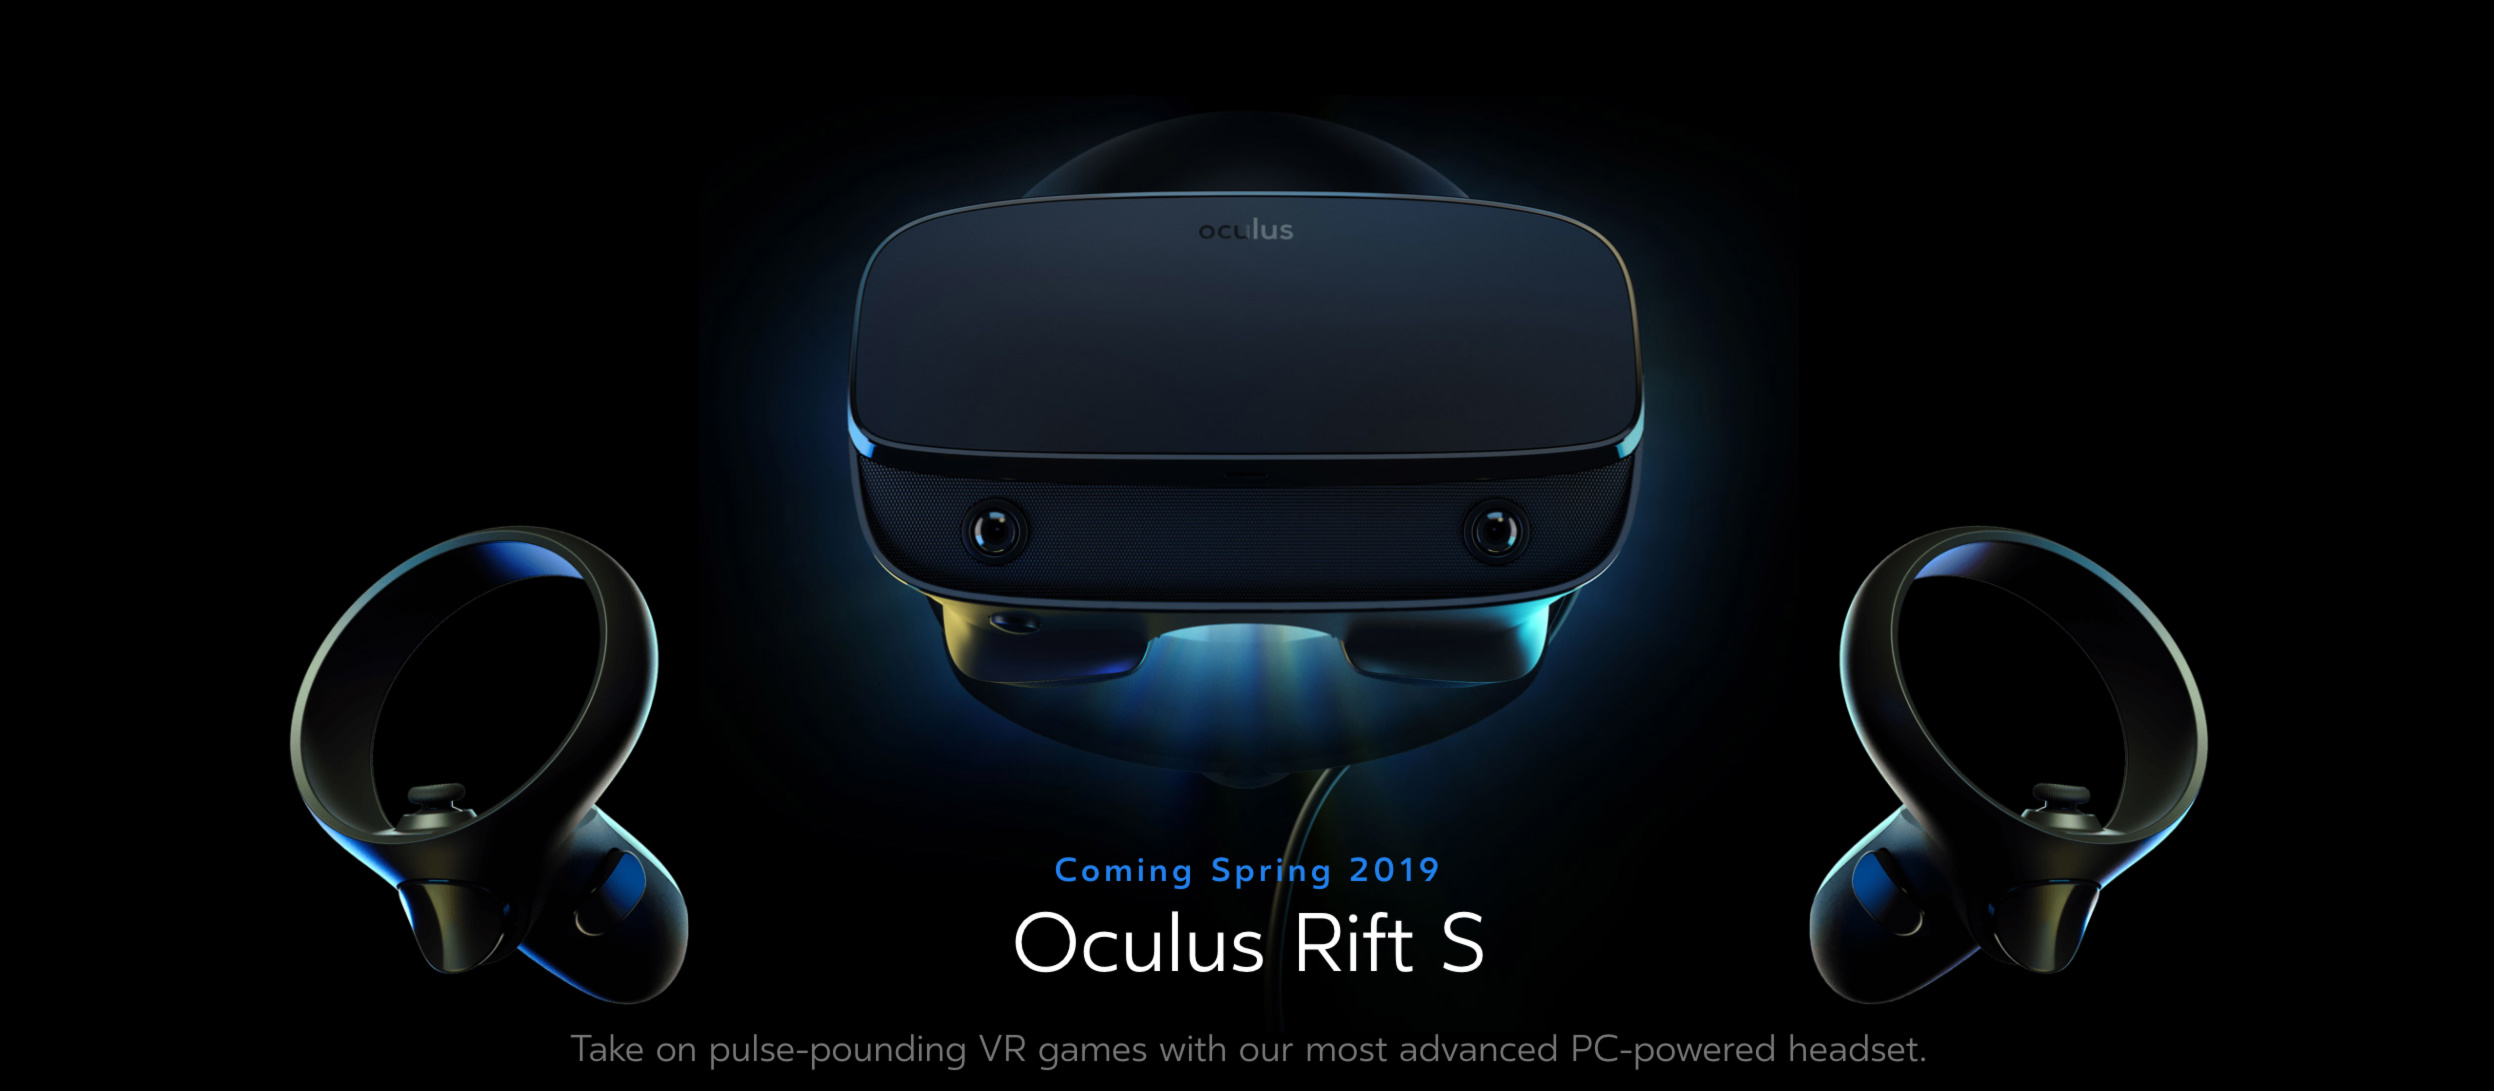 Oculus Rift S改用inside Out位置追蹤技術 預計春季上市售價399美元 Ithome